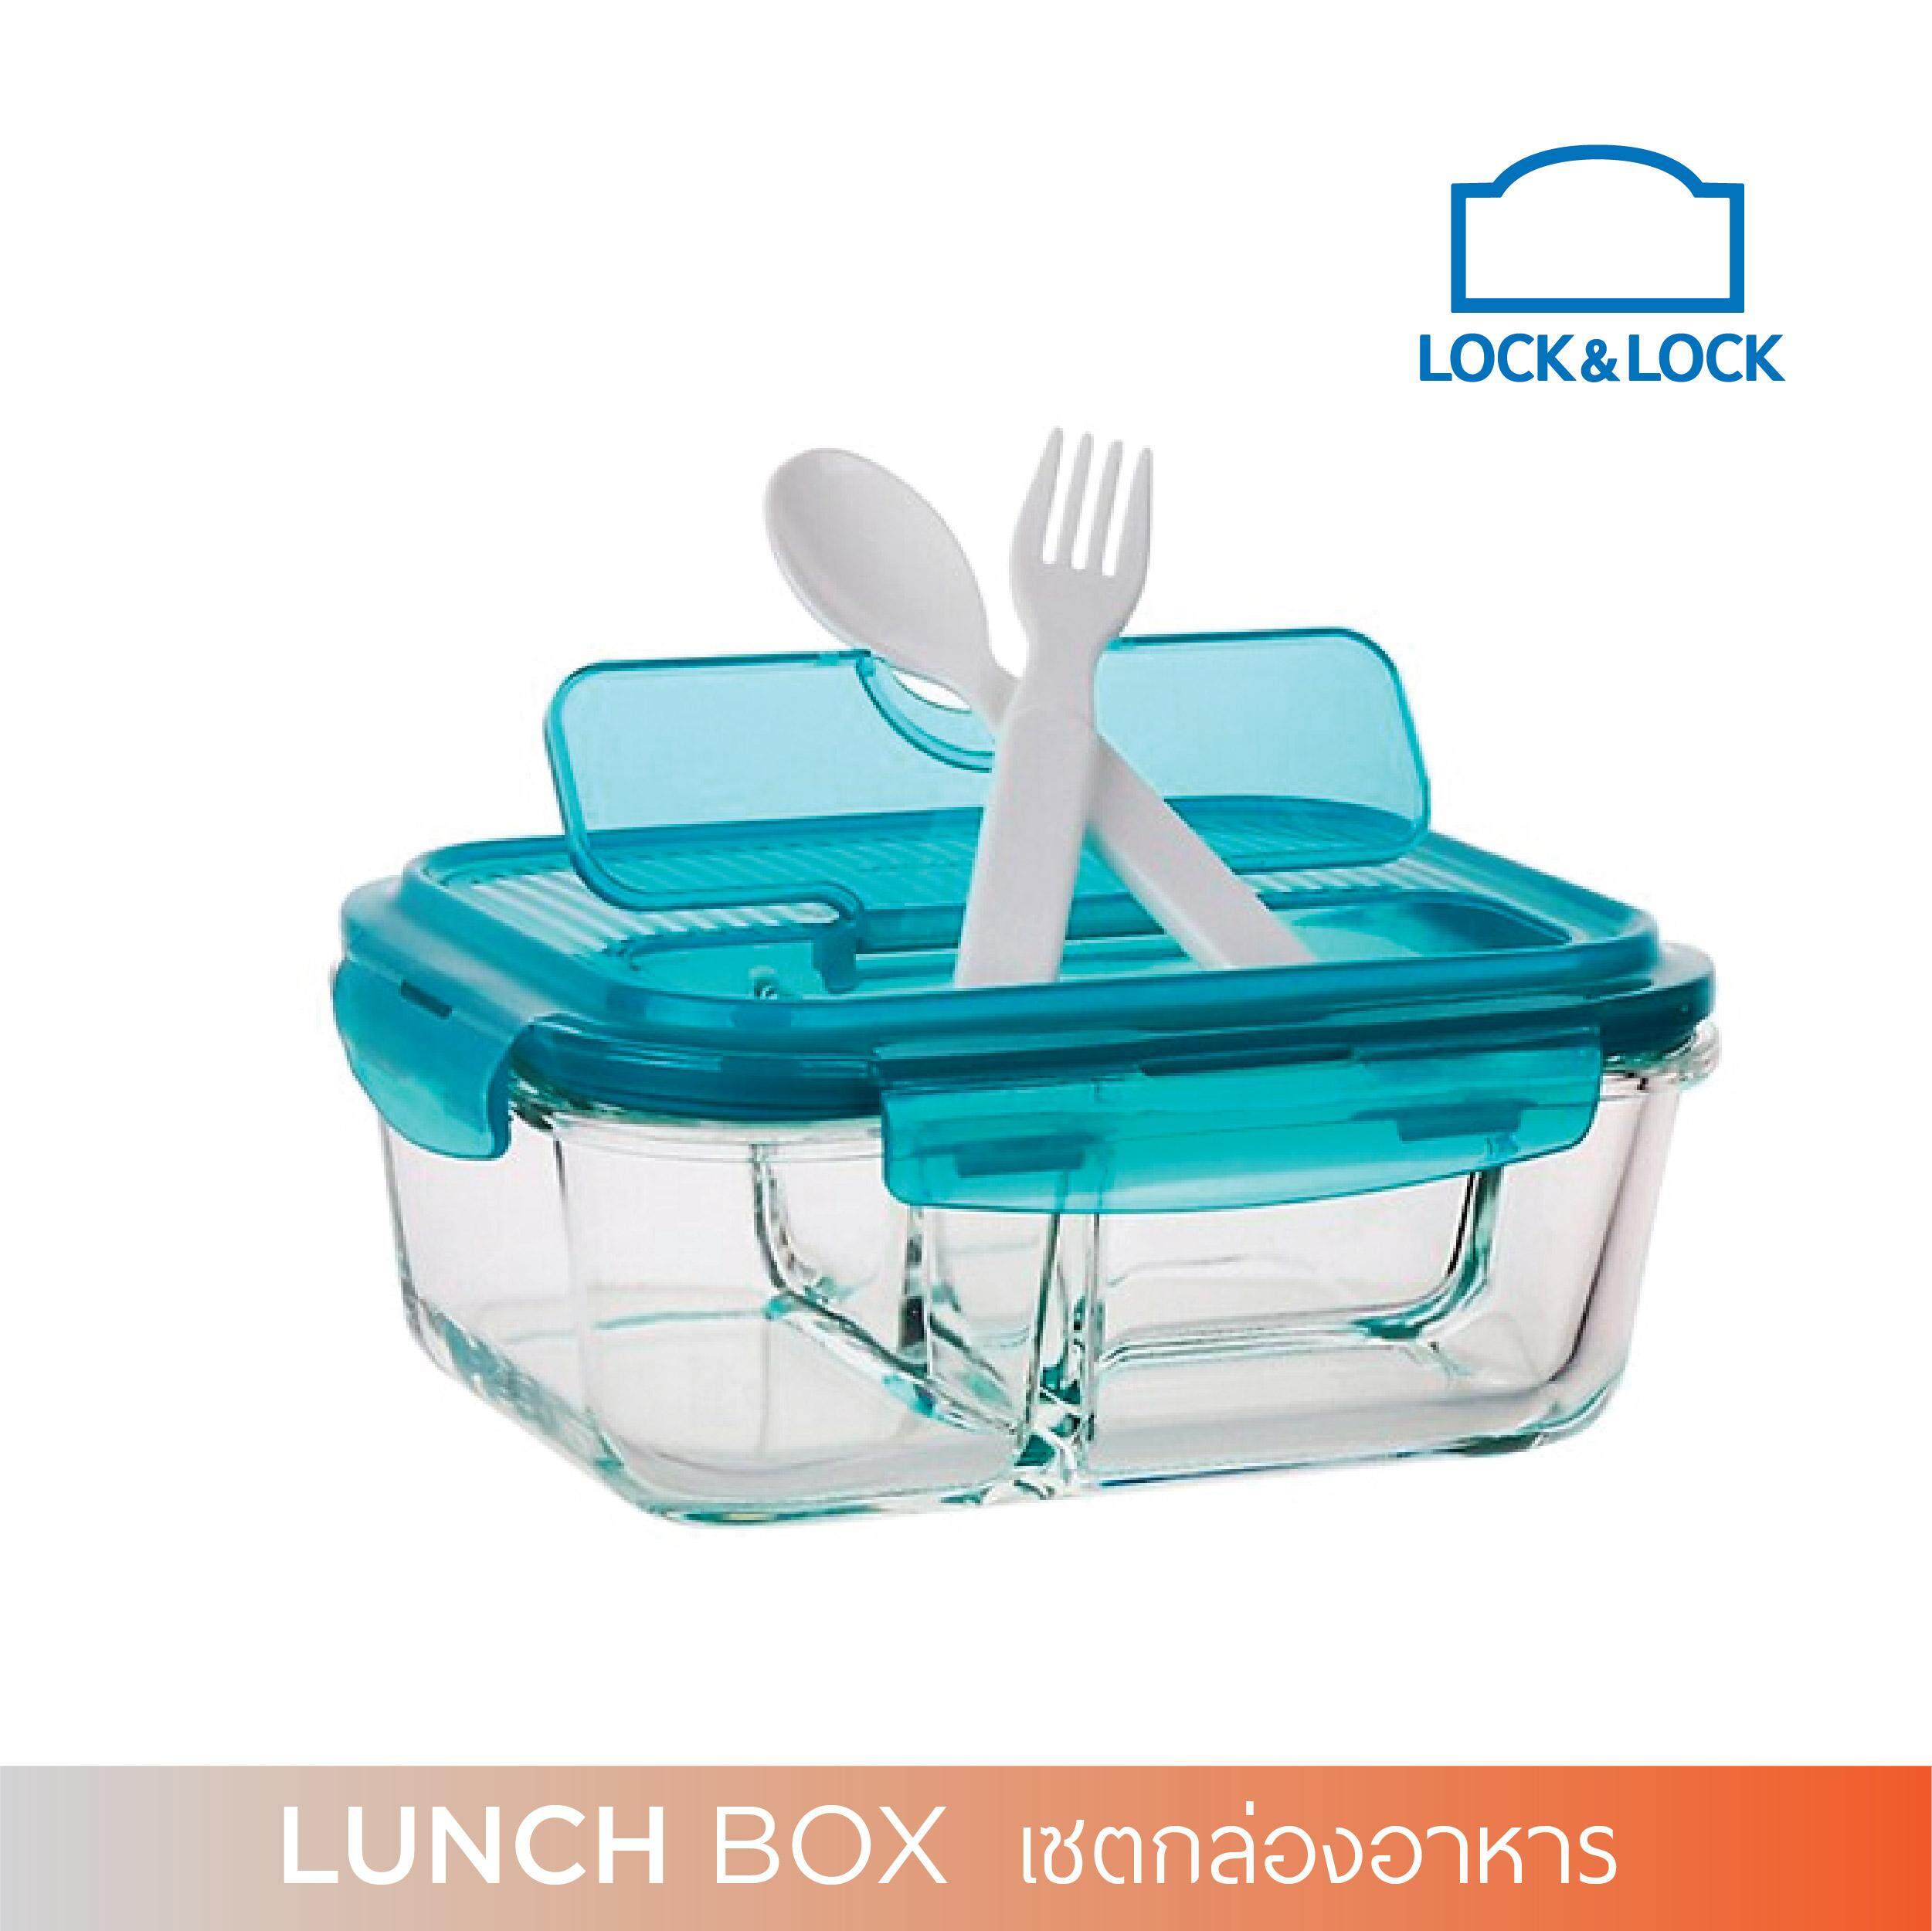 LOCK&LOCK Glass Lunch Box กล่องแก้วอาหารกลางวันมีช้อนส้อมในตัว ความจุ 1000ml รุ่น LLG447CTLG